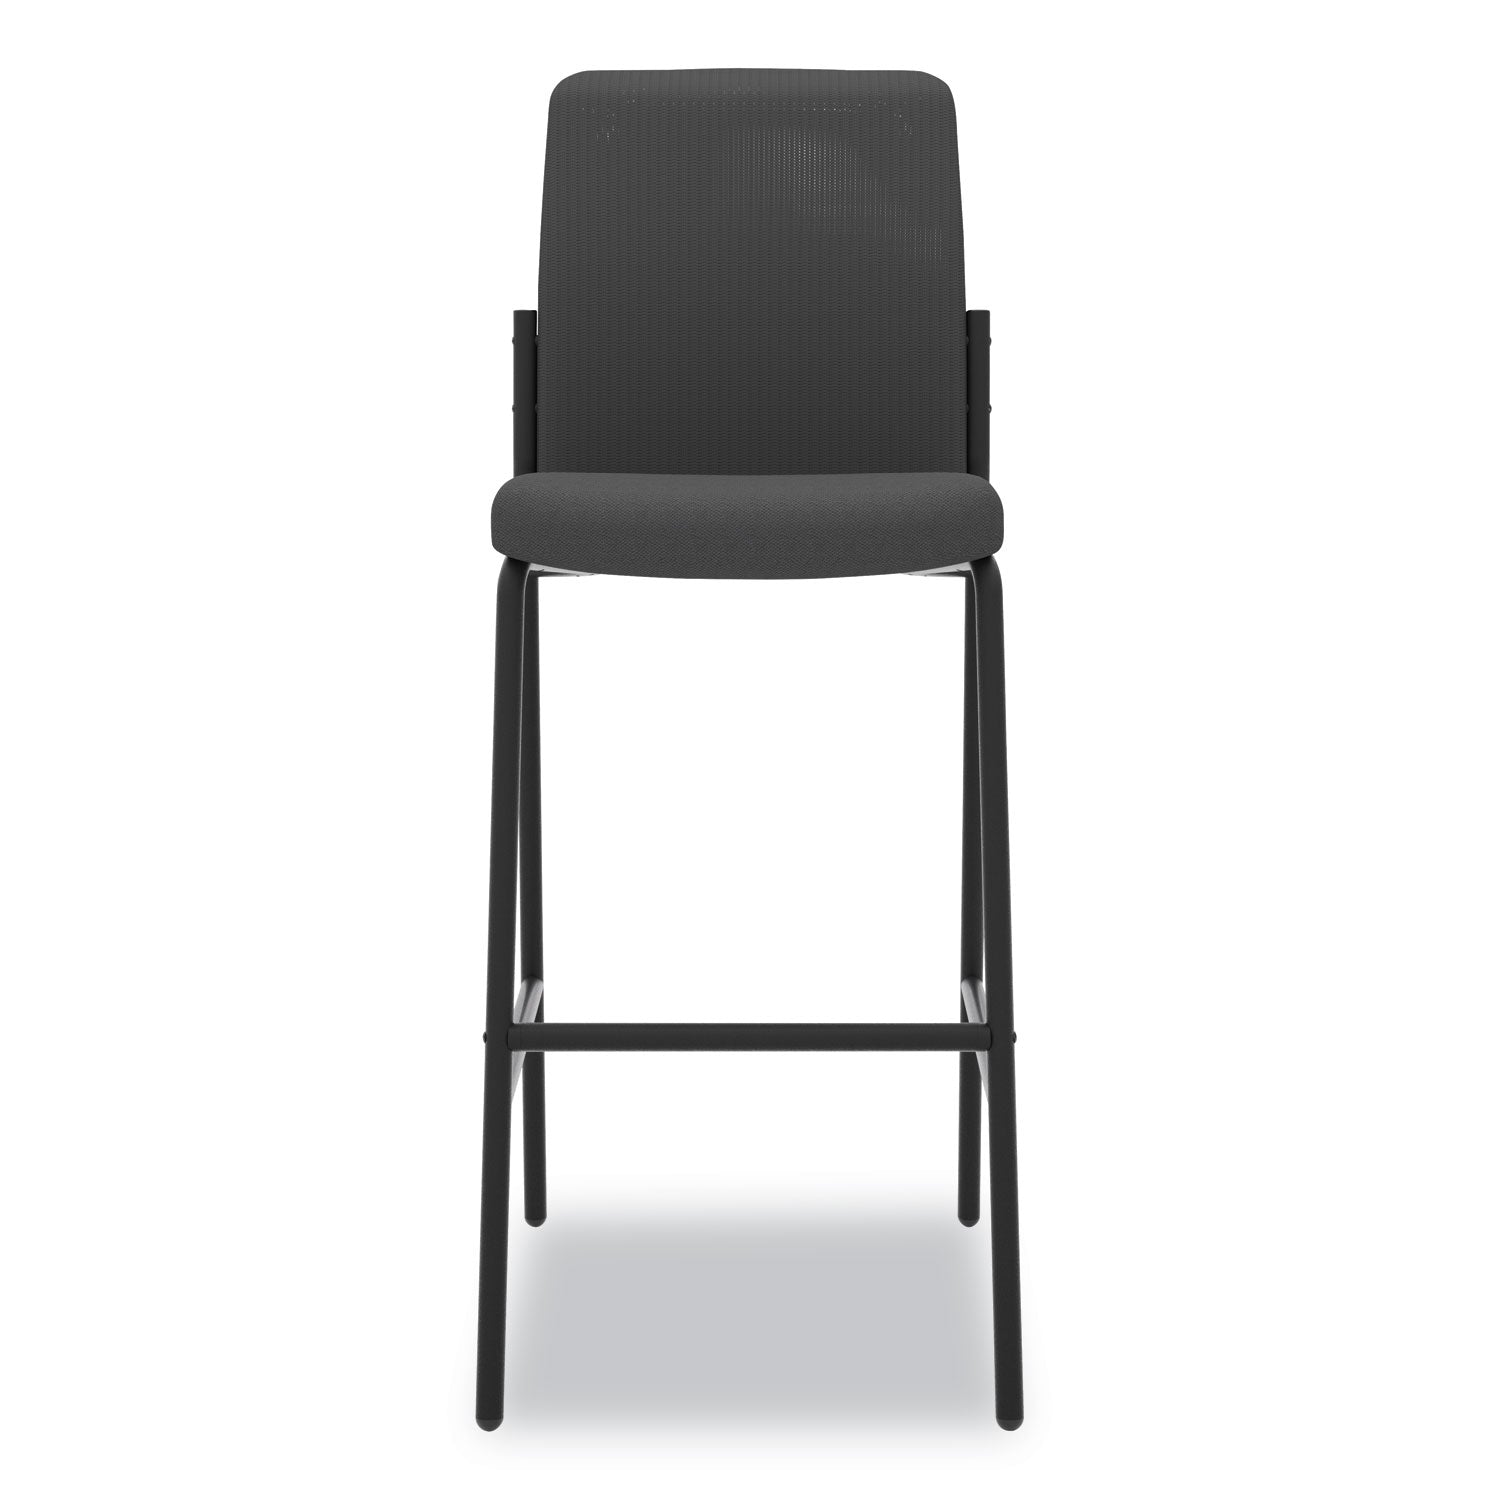 instigate-mesh-back-multi-purpose-stool-supports-up-to-250-lb-33-seat-height-black-seat-black-back-black-base-2-carton_bsxvl528es10 - 3